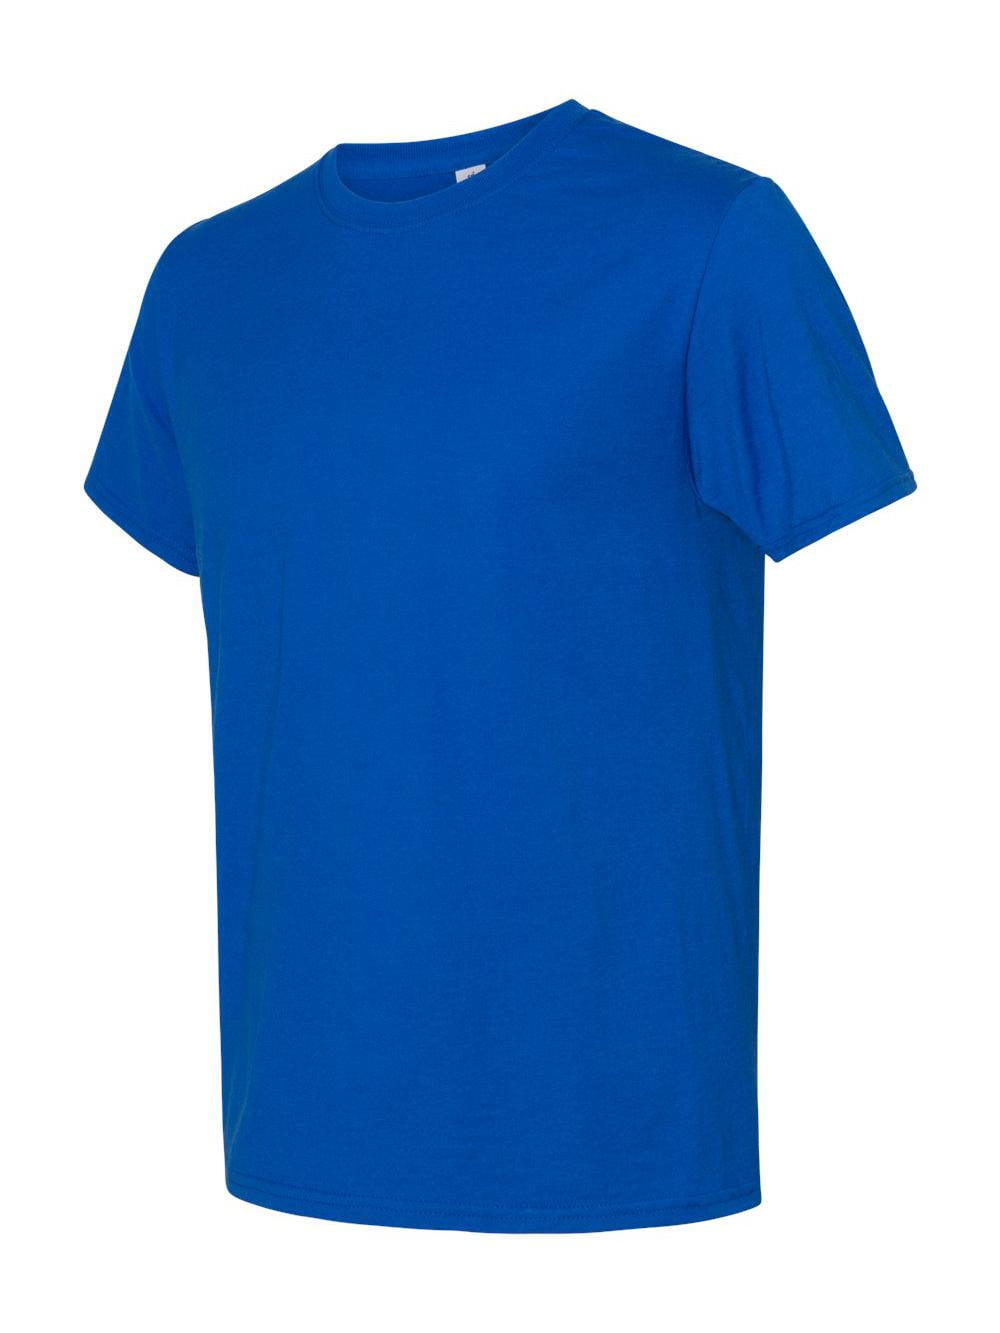 JERZEES - Premium Blend Ringspun Crewneck T-Shirt - 560MR - Walmart.com